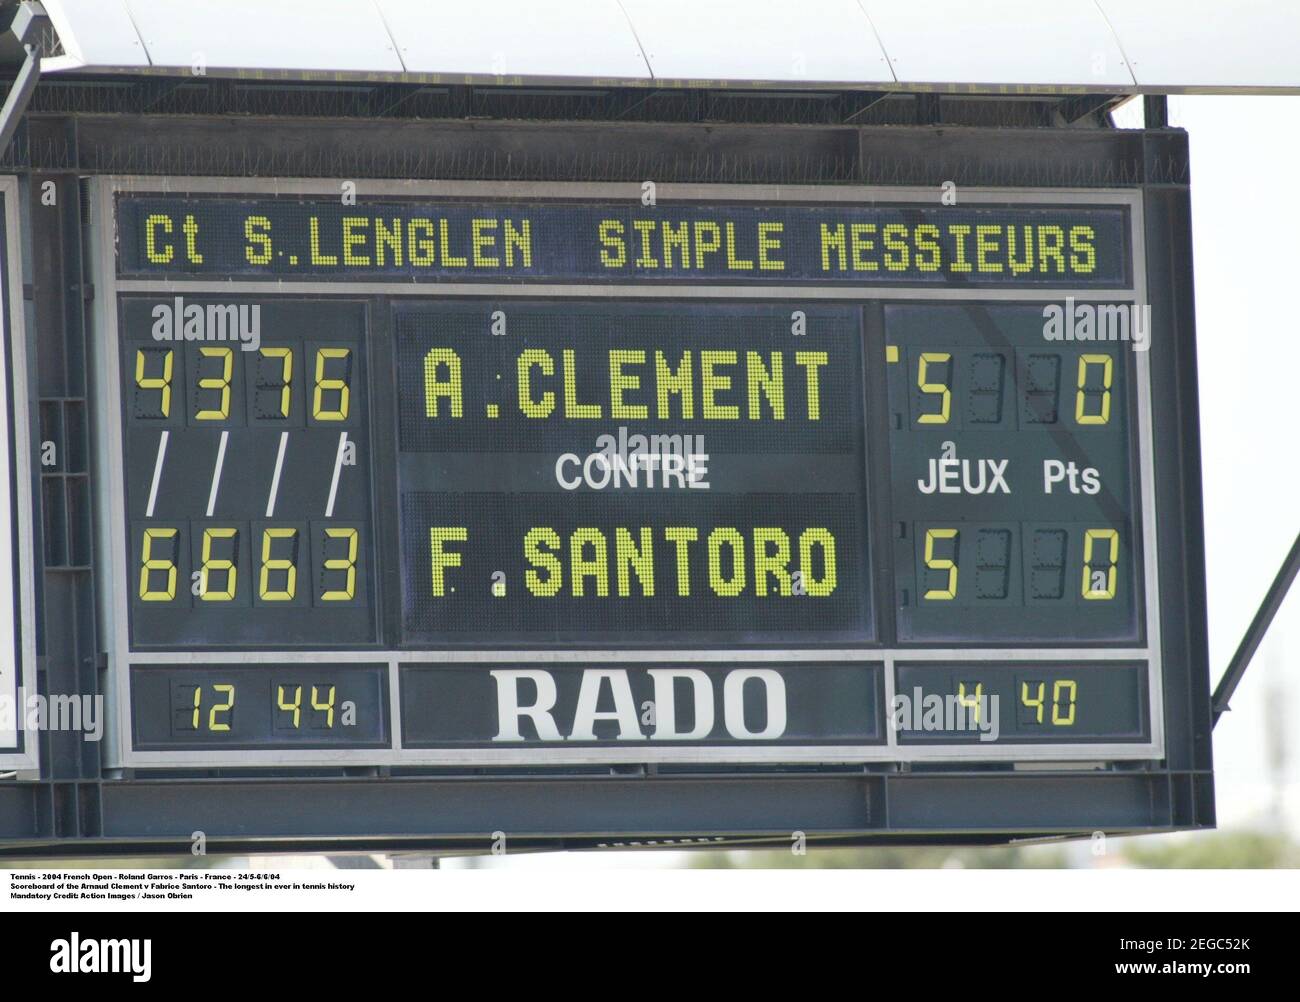 Tennis - 2004 French Open - Roland Garros - Paris - France - 24/5-6/6/04  Scoreboard of the